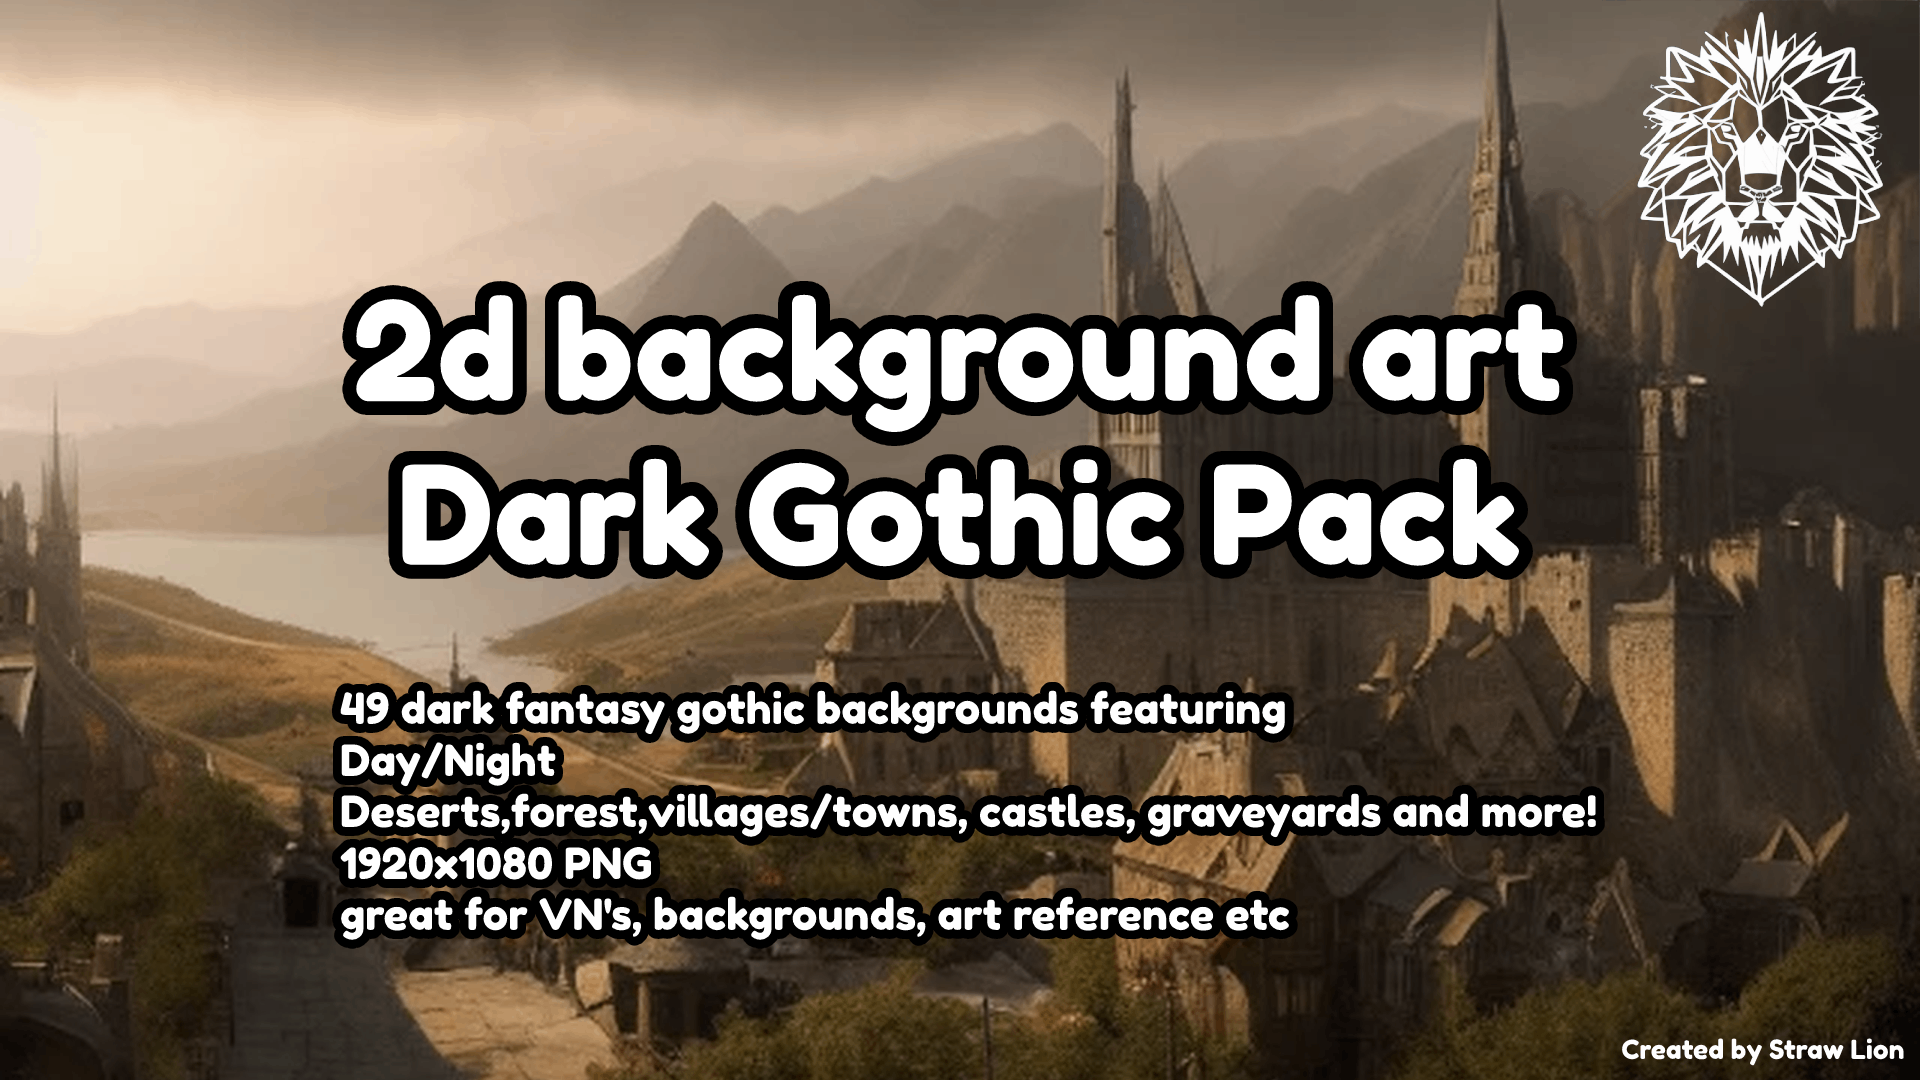 Dark Gothic Pack Backgrounds 2d Art Pack